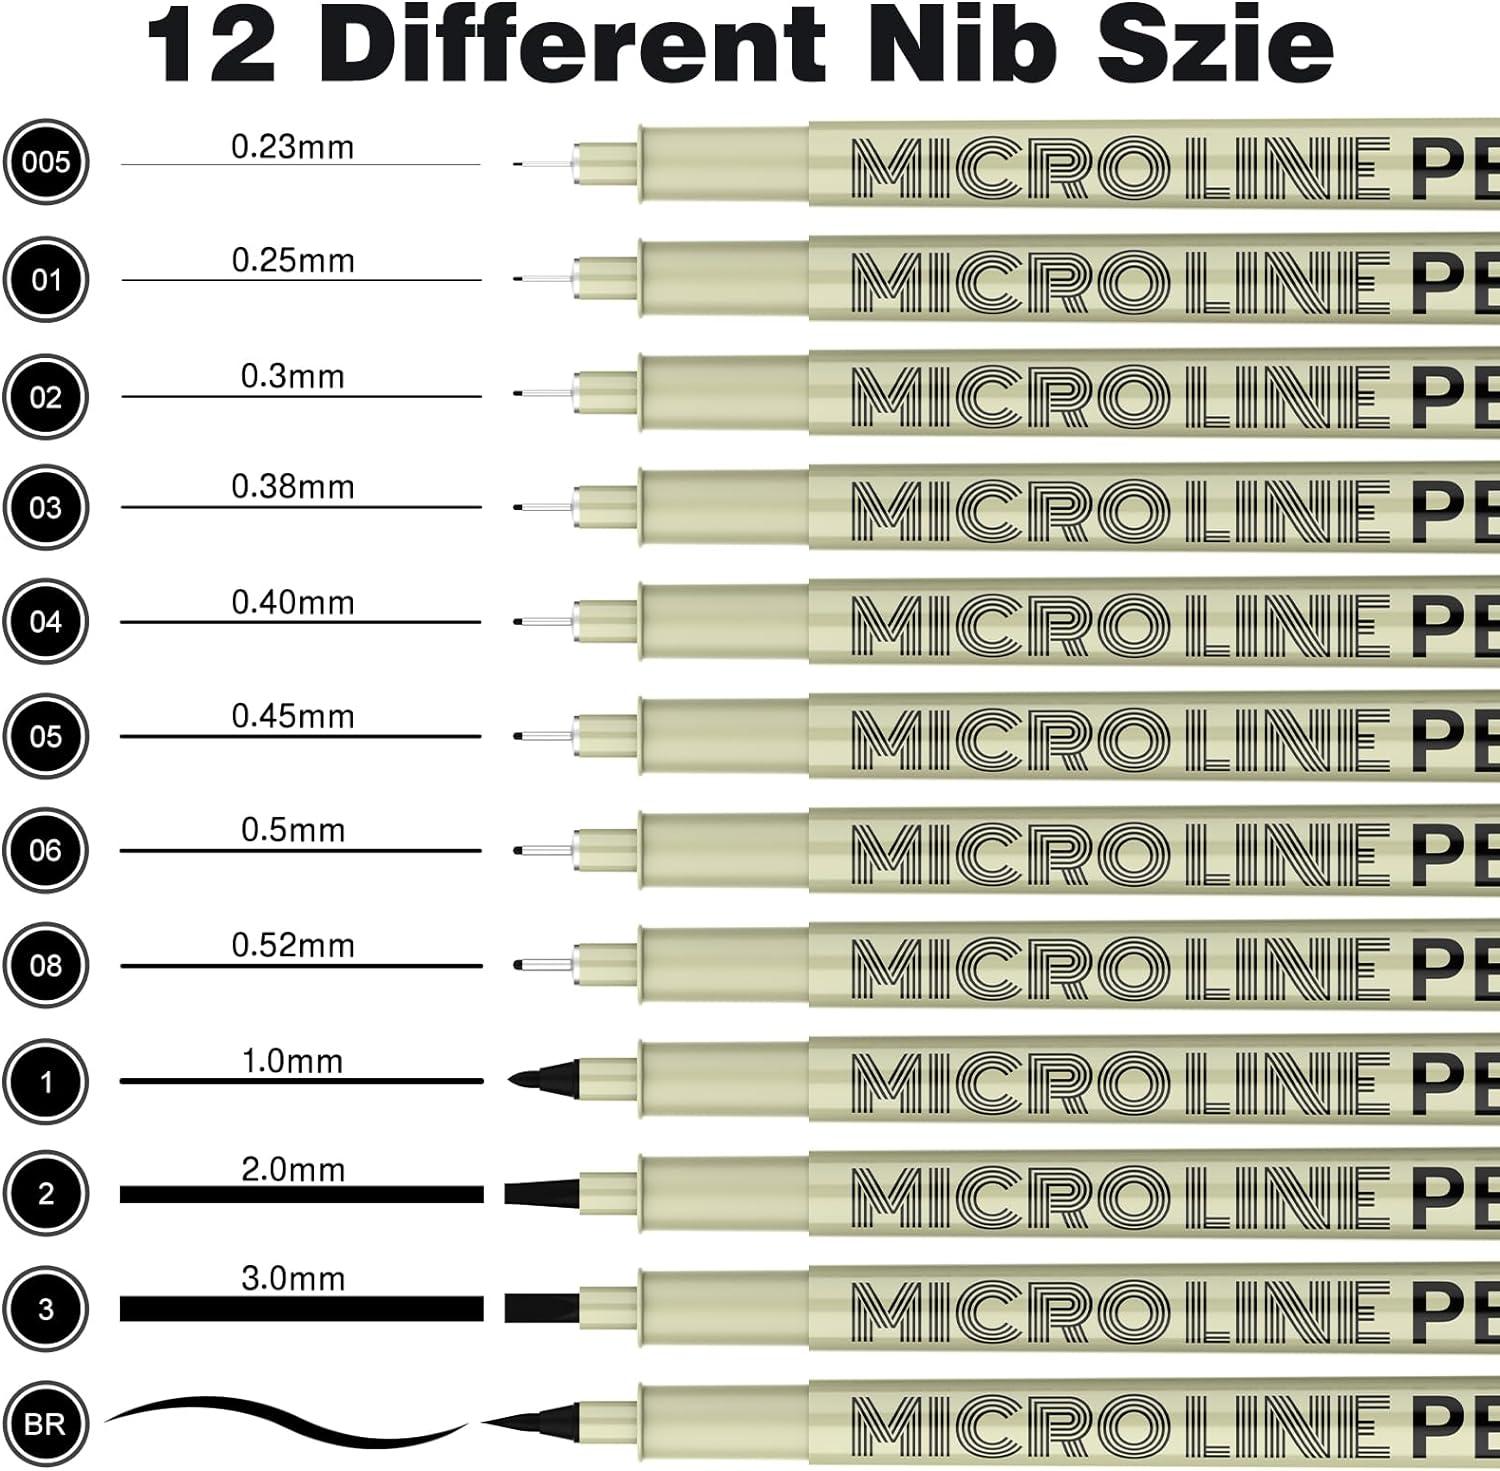 Micro-Pen Fineliner Ink Pens 12 Pack Black Micro Fine Point Drawing Pens  Waterproof Archival Ink